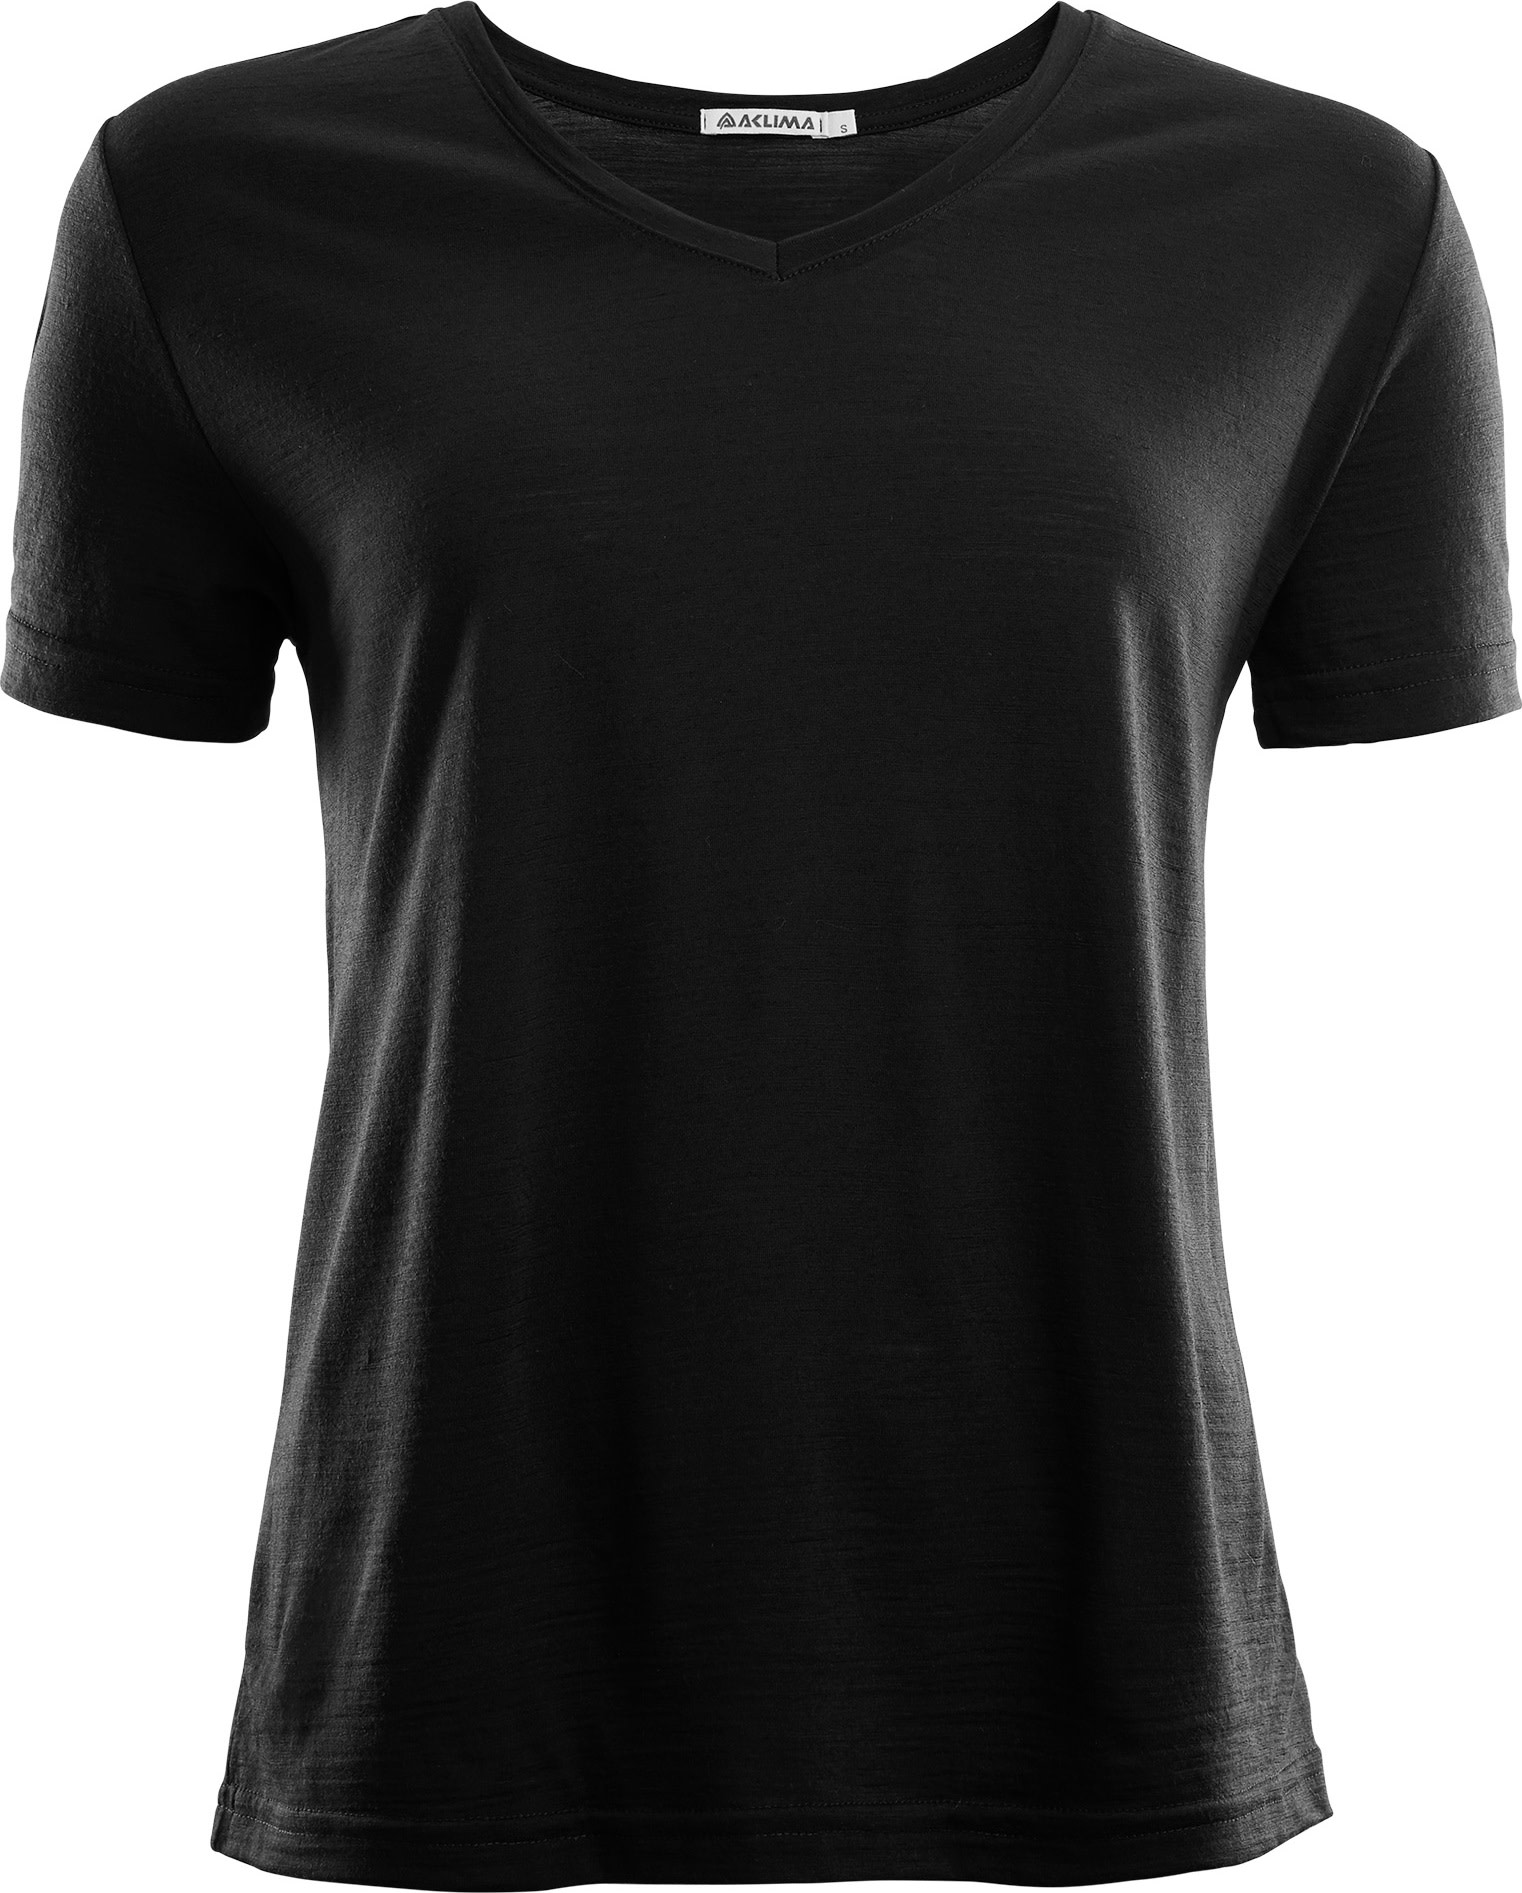 Women’s LightWool T-shirt Loose Fit Jet Black